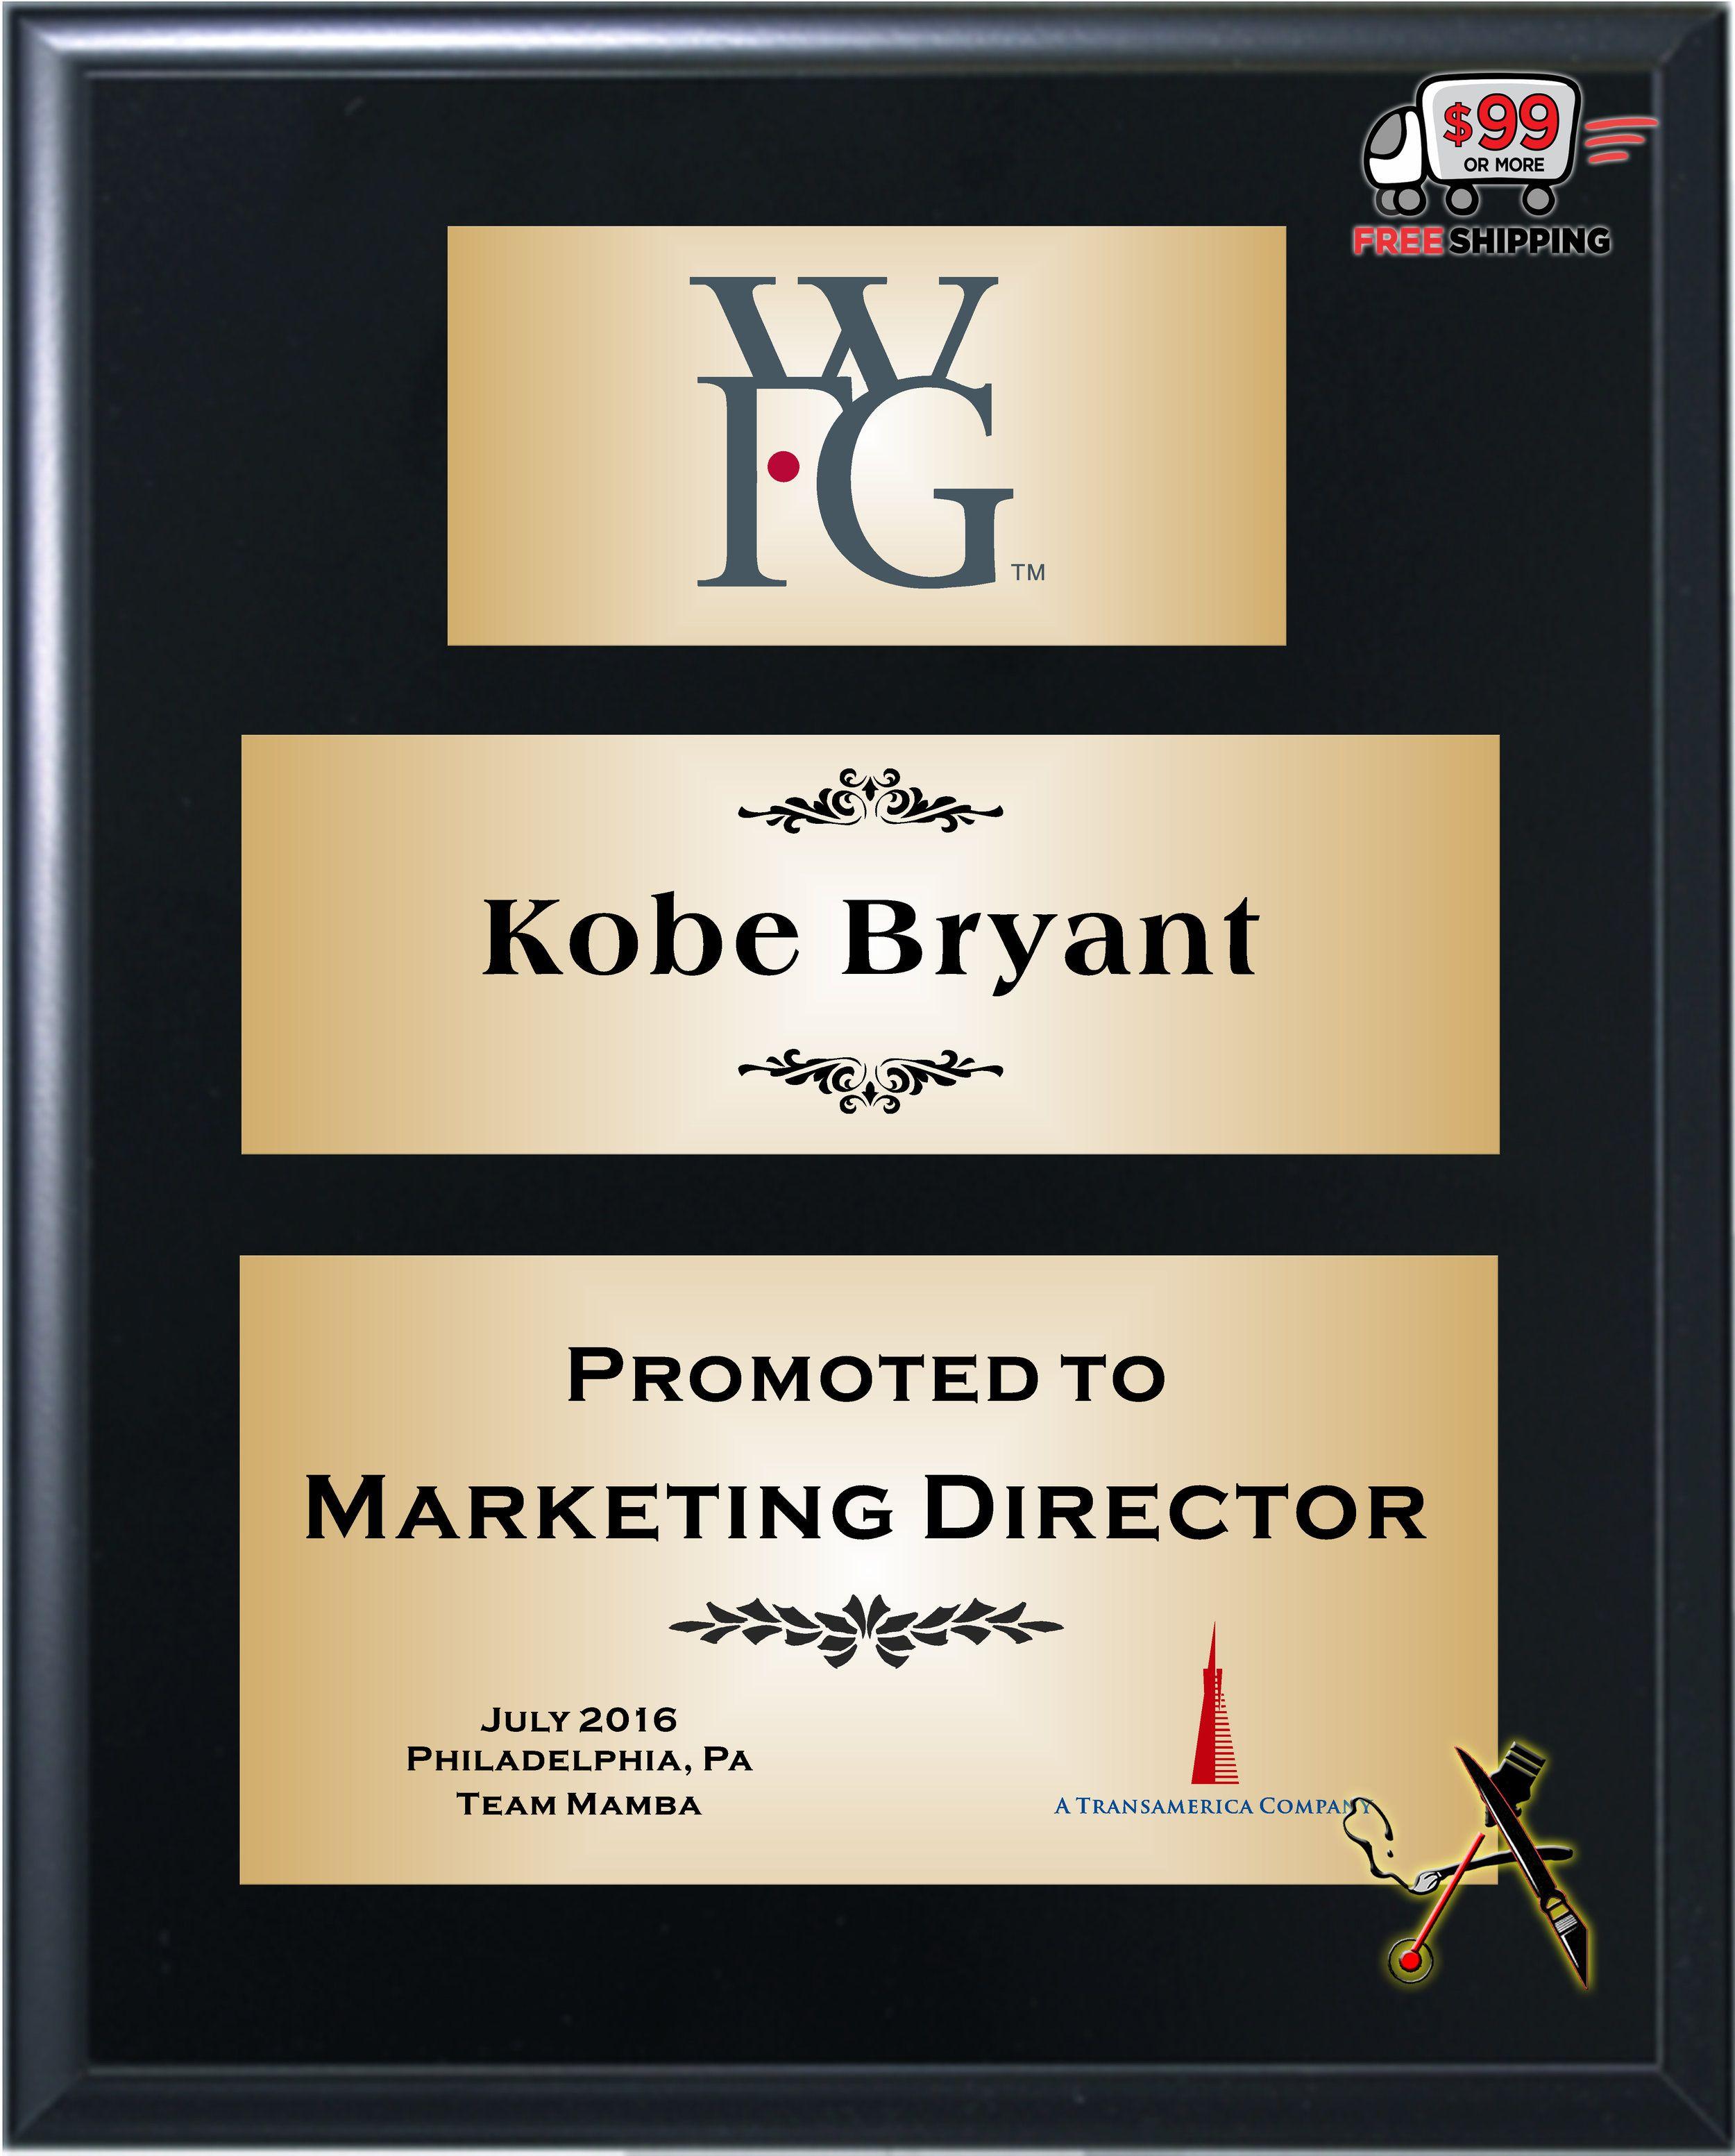 WFG Logo - WFG Marketing Director Promotion Plaque (Item# WFG 1620GBW) WFG Logo